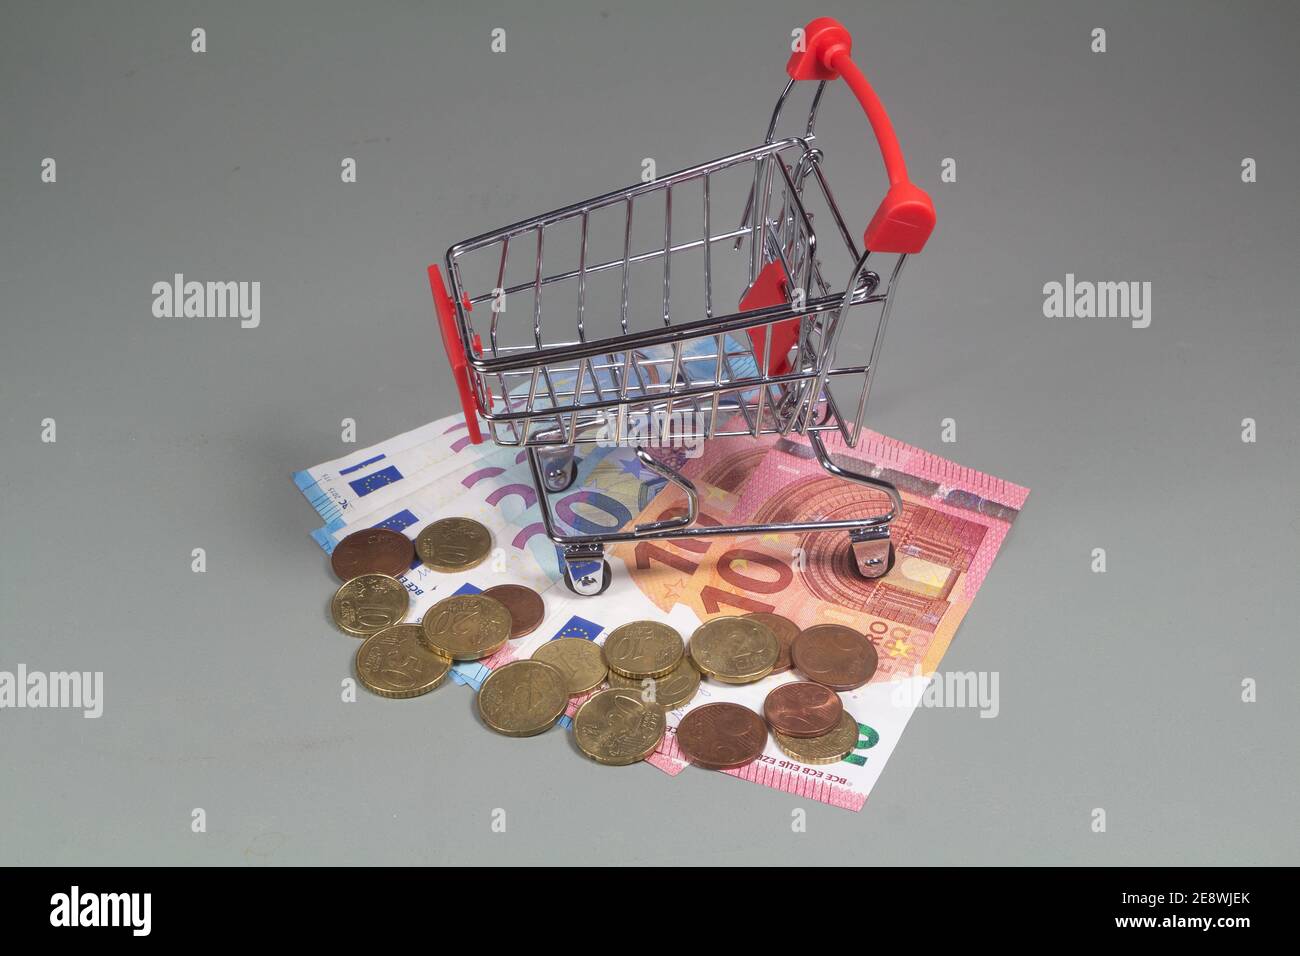 Small shopping cart, euros coins and banknotes Stock Photo